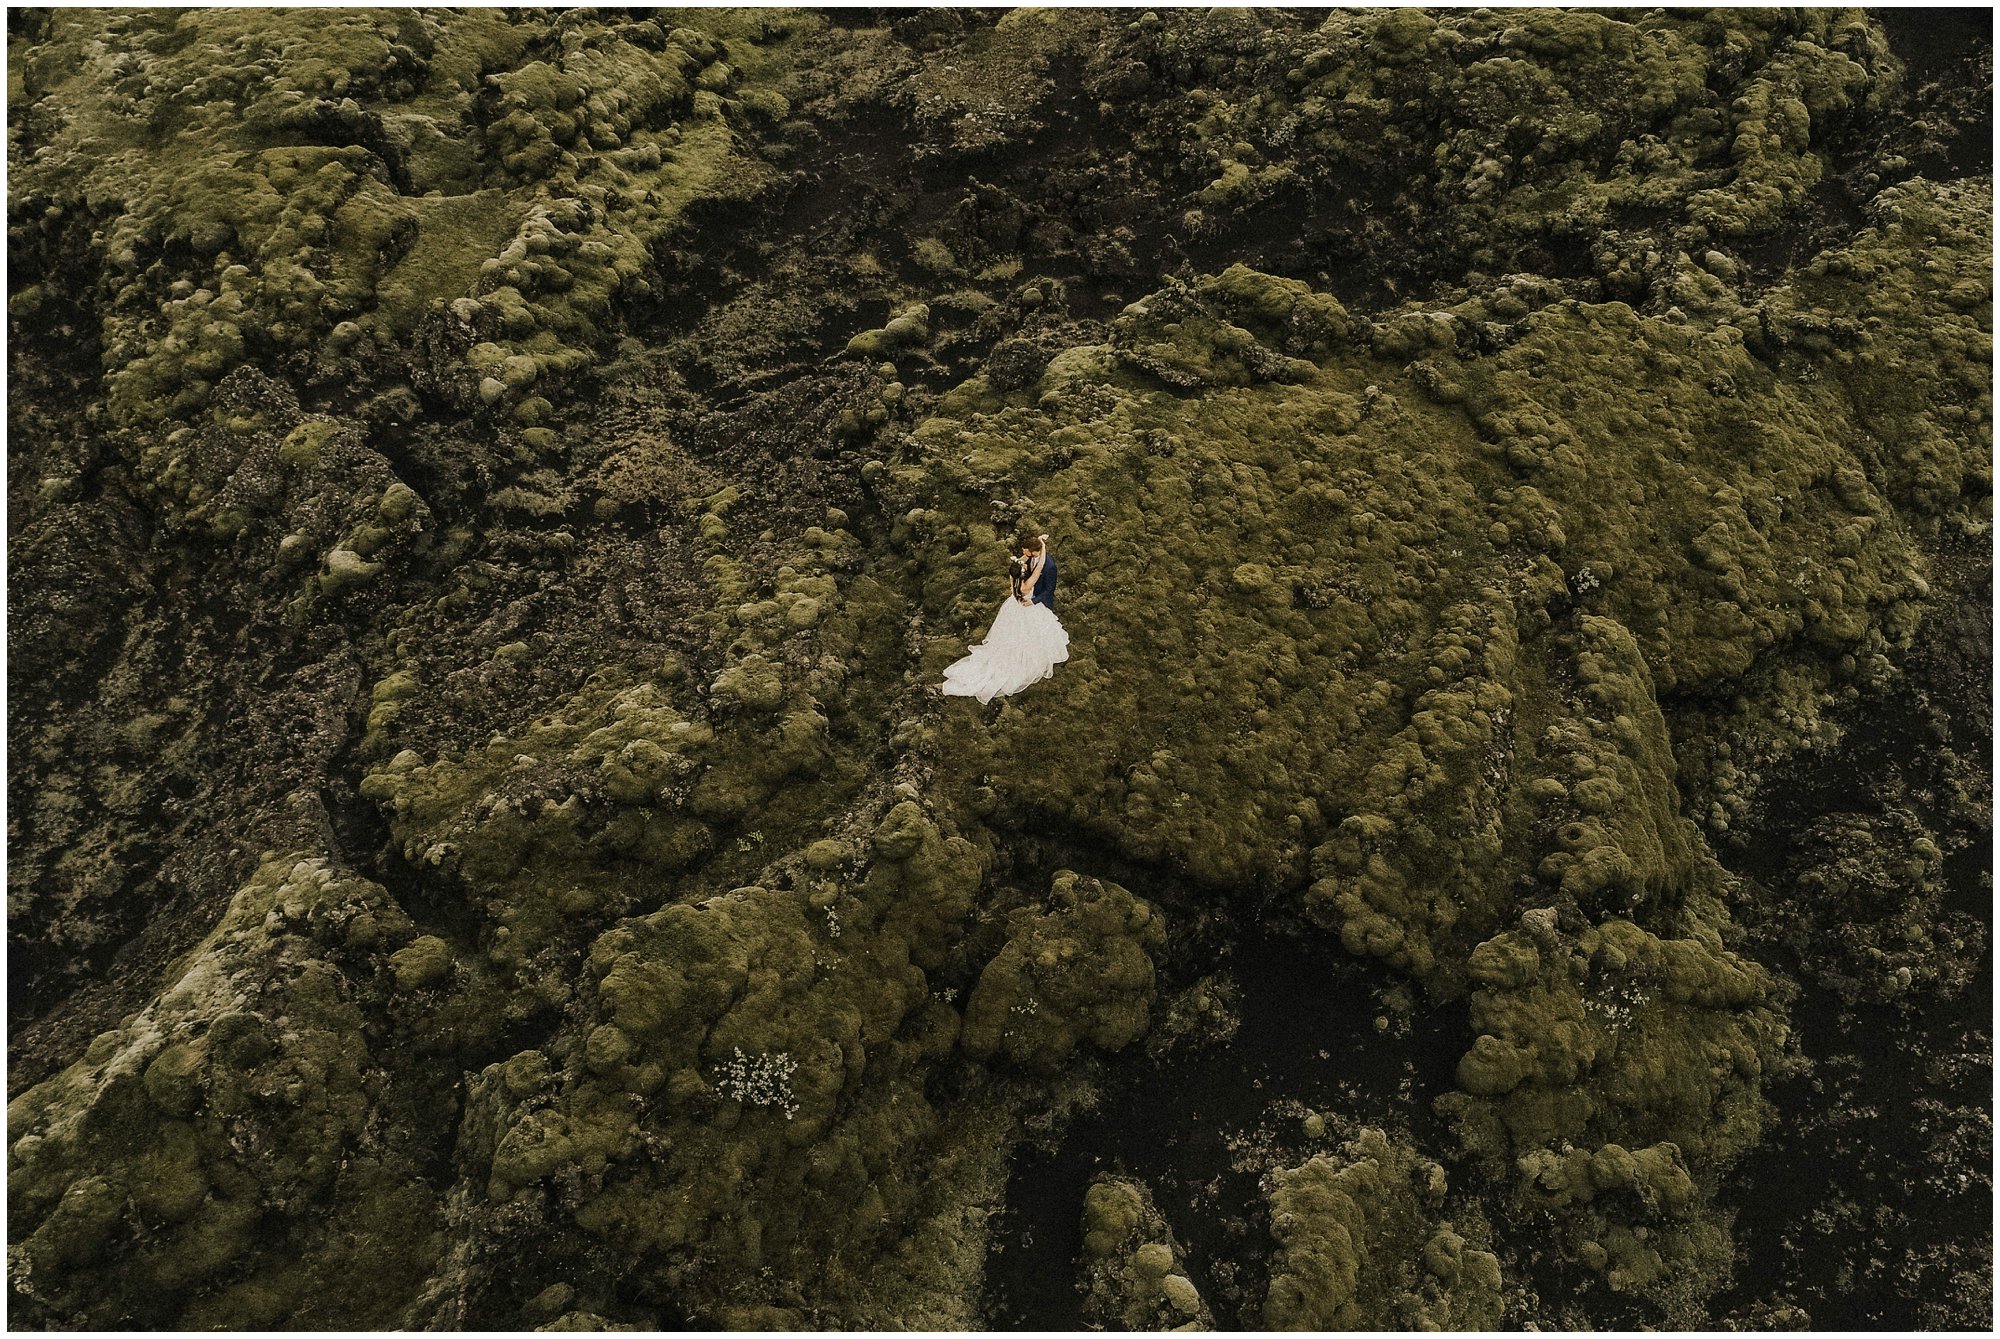 southern iceland elopement lava fields wedding photographer 